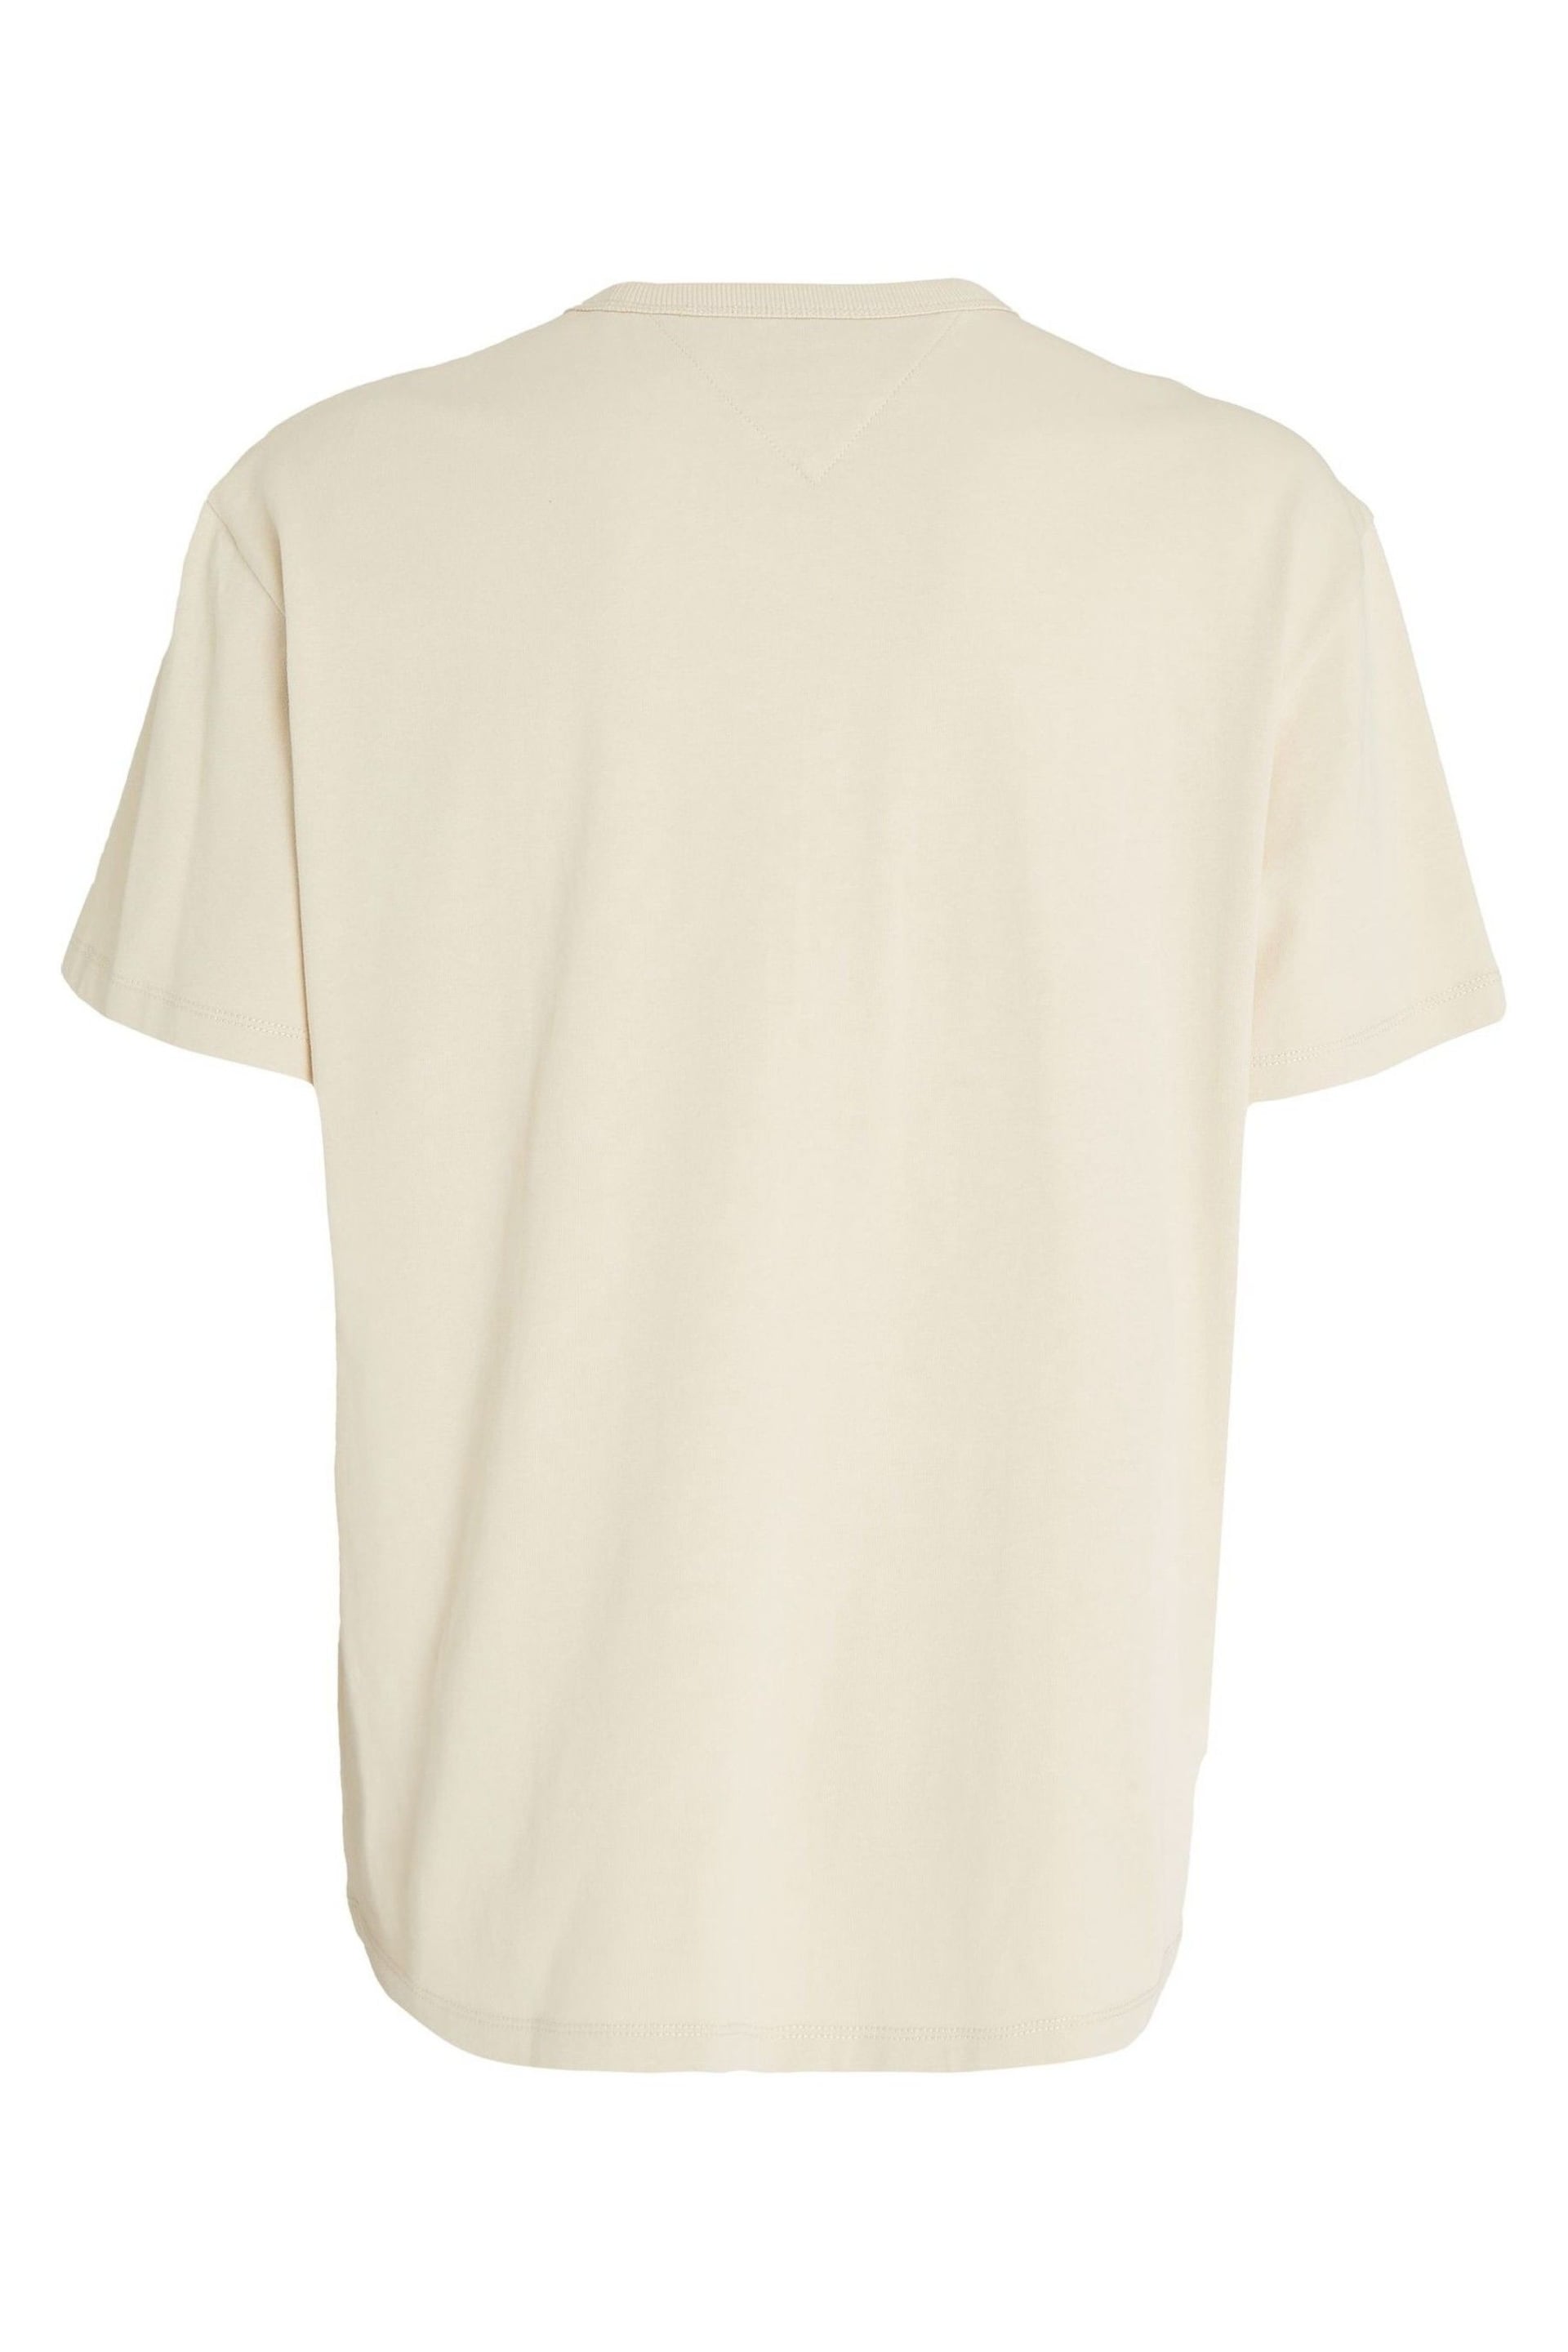 Tommy Jeans Regular Fit Badge T-Shirt - Image 5 of 6